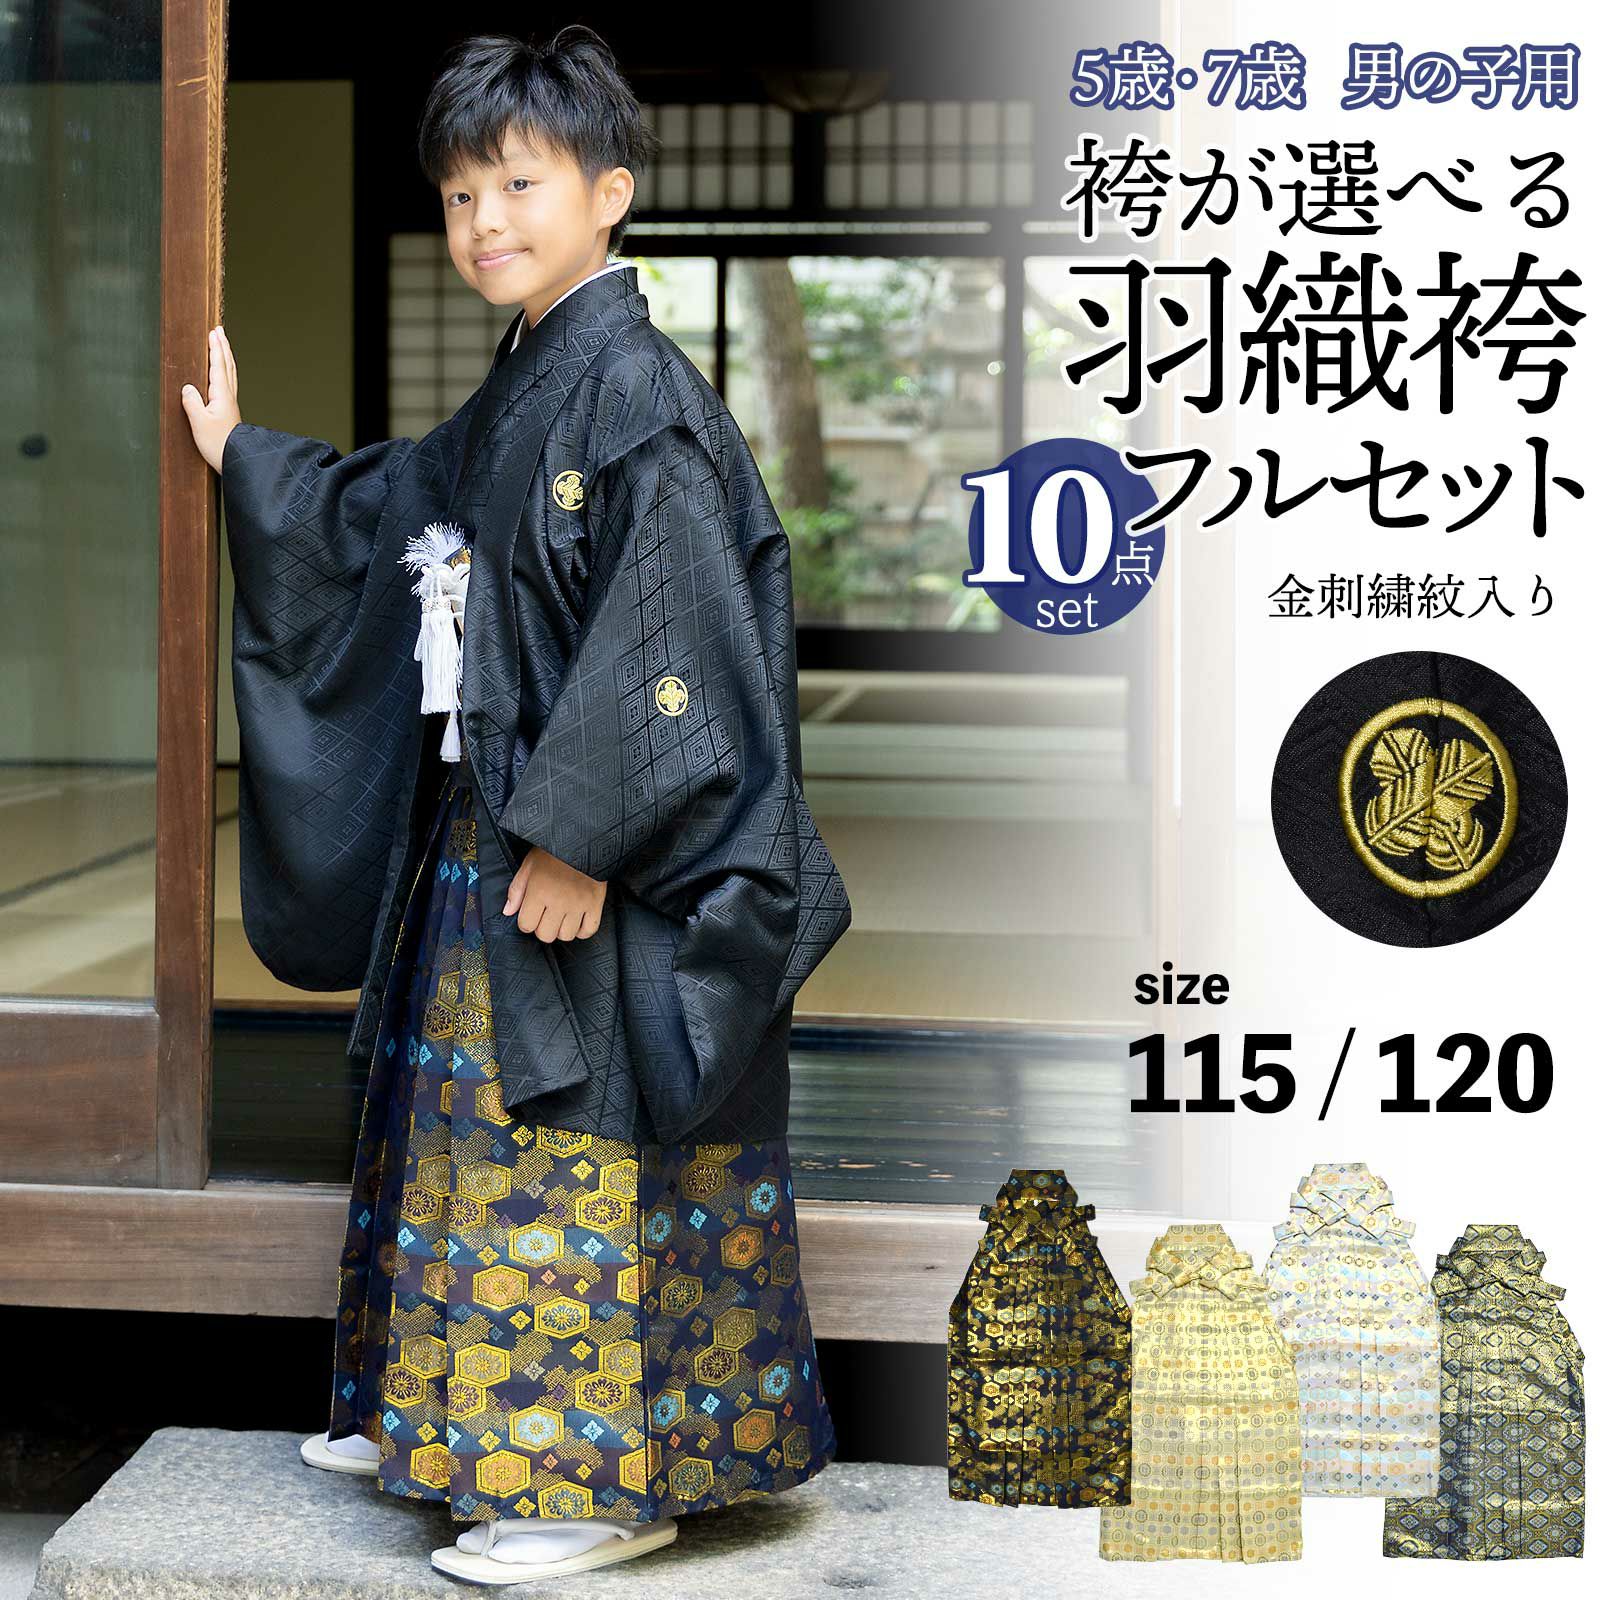 七五三 五歳 男児 羽織袴フルセット 着物 金刺繍 兜 袴変更可 NO39770 